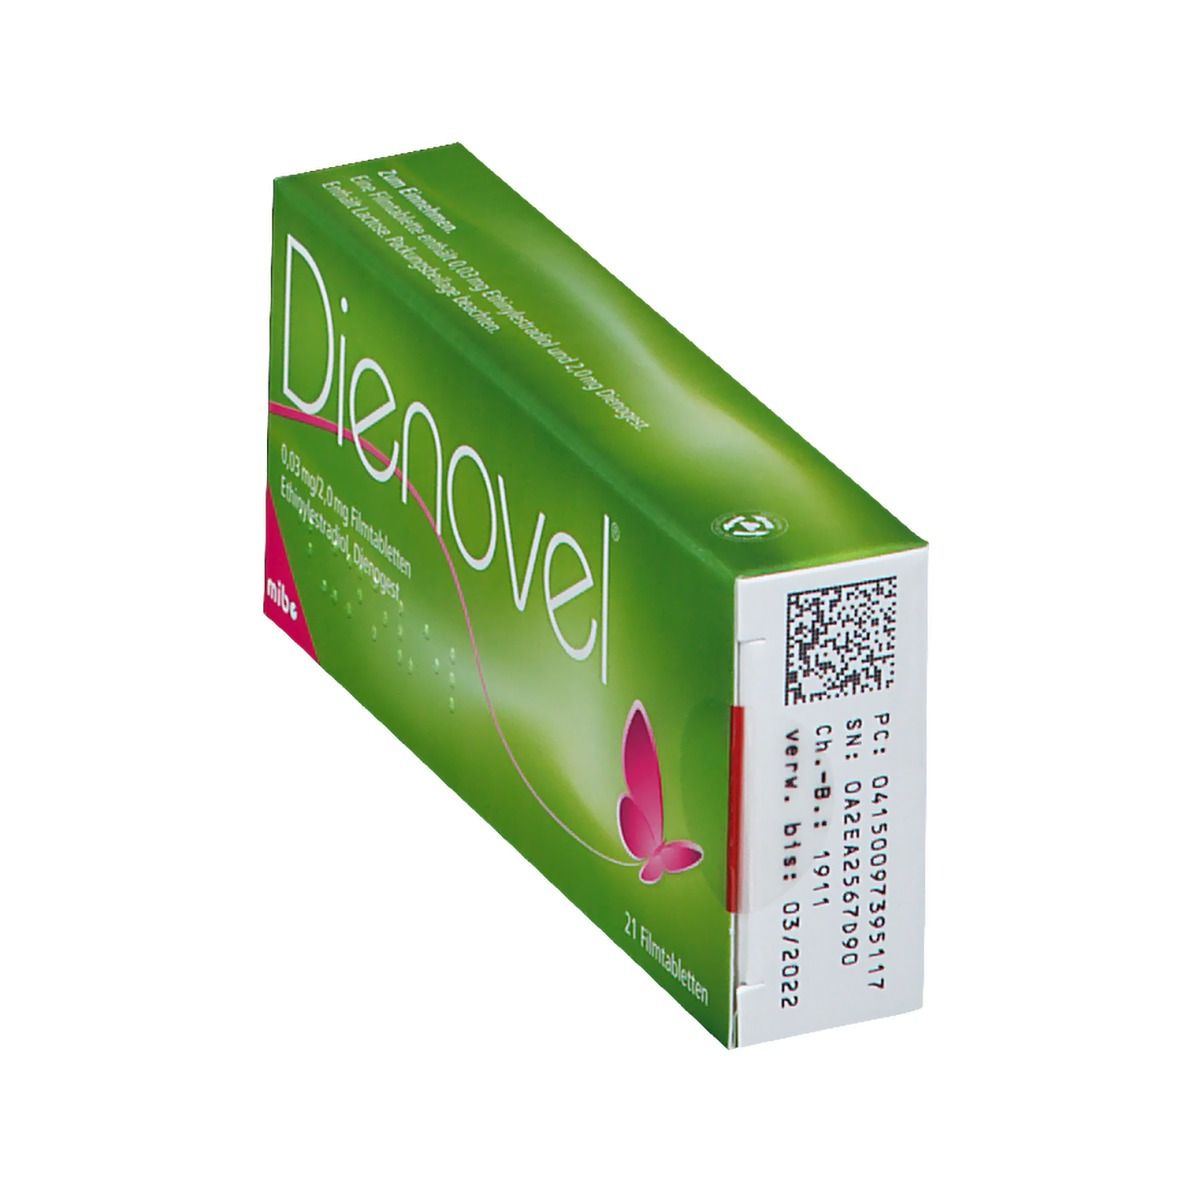 Dienovel 0,03 mg/2,0 mg